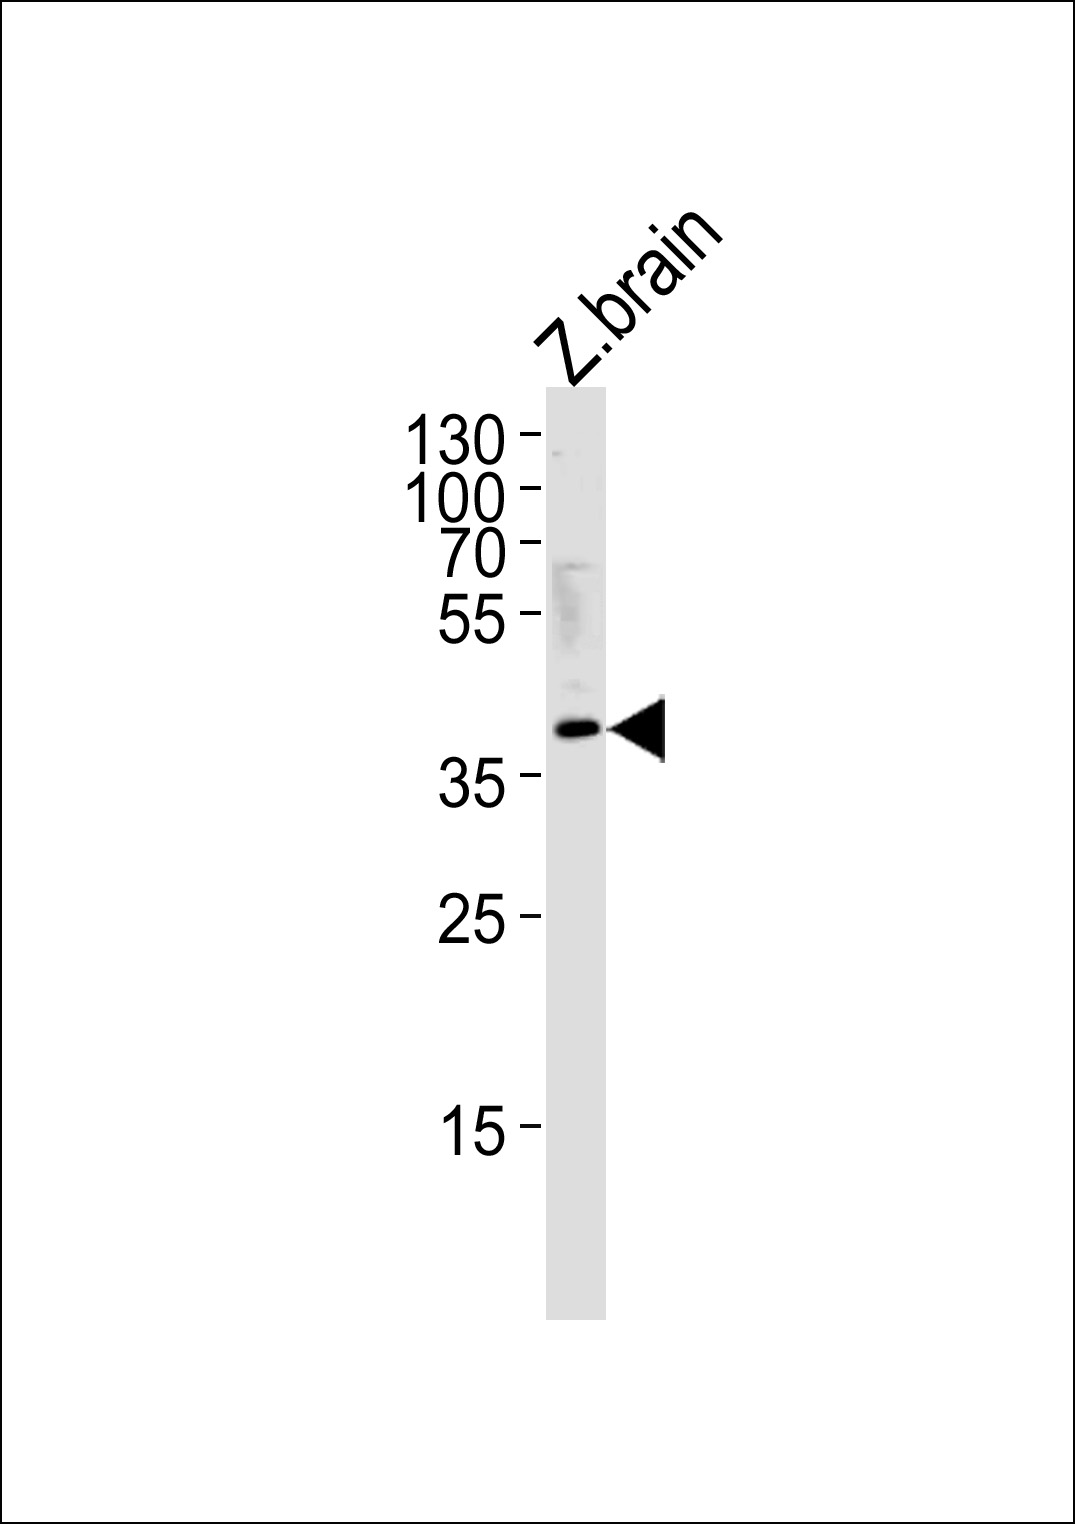 DANRE hey2 Antibody (C-term) (Cat. #Azb10024b) western blot analysis in zebra fish brain tissue lysates (35ug/lane).This demonstrates the DANRE hey2 antibody detected the DANRE hey2 protein (arrow).